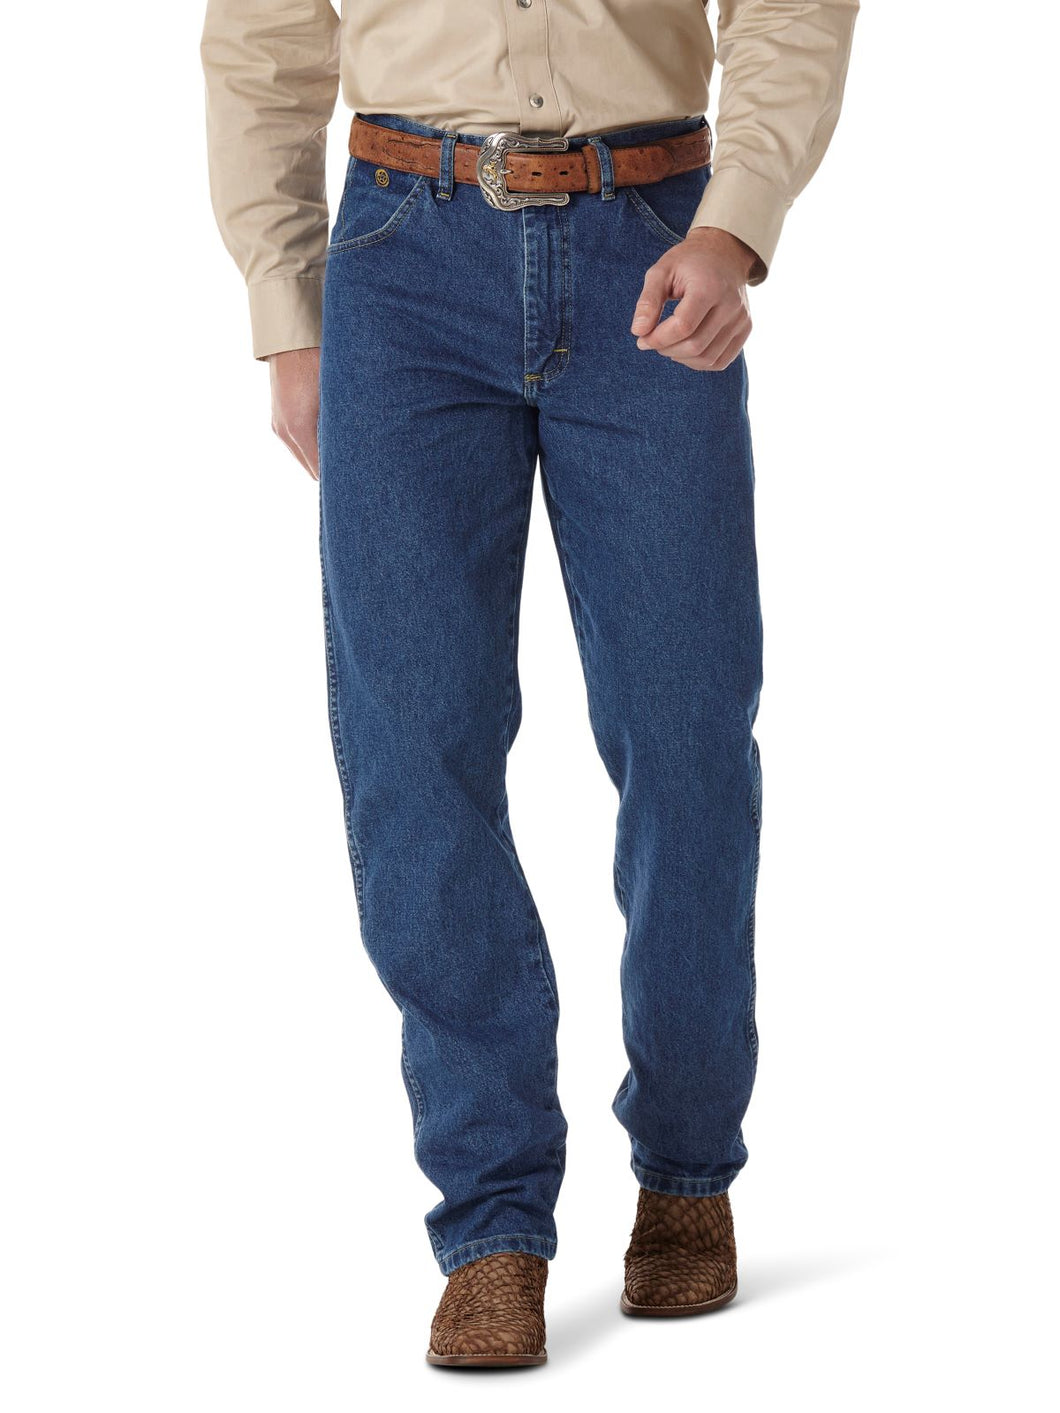 'Wrangler' Men's George Strait Cowboy Cut® Relaxed Fit - Heavyweight Stone Denim